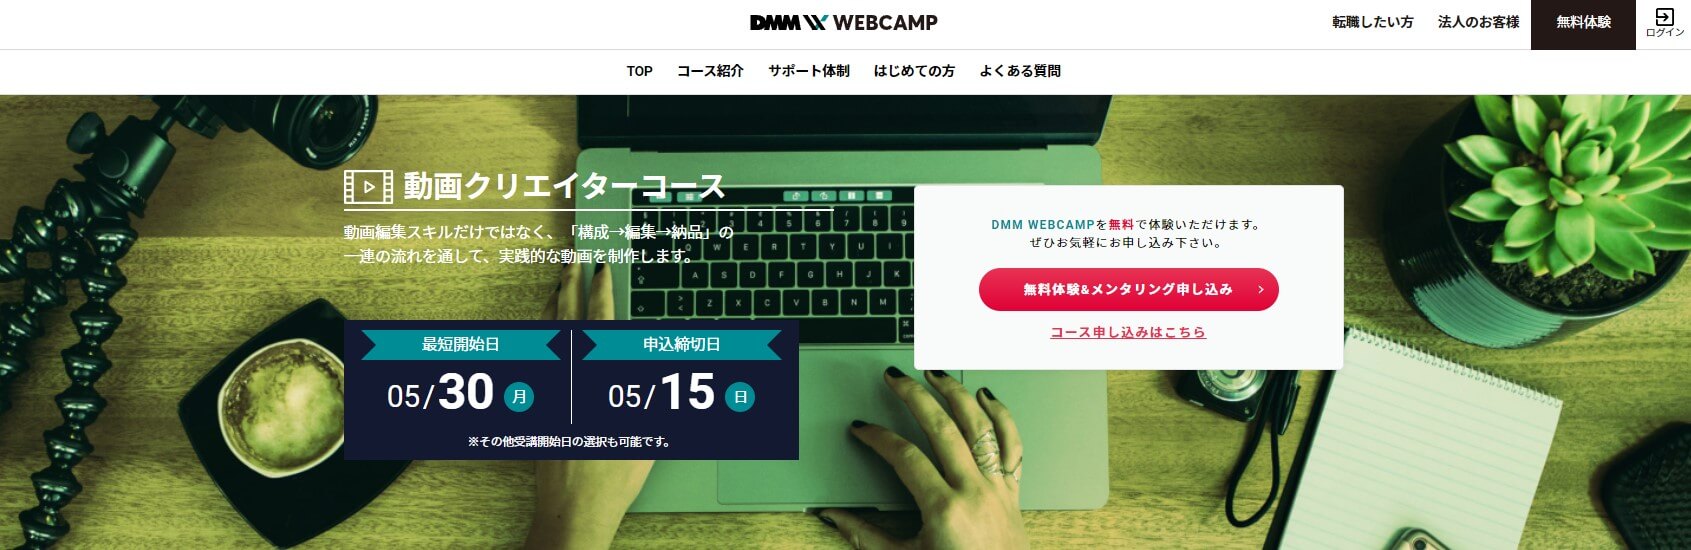 DMM WEBCAMPのトップページ